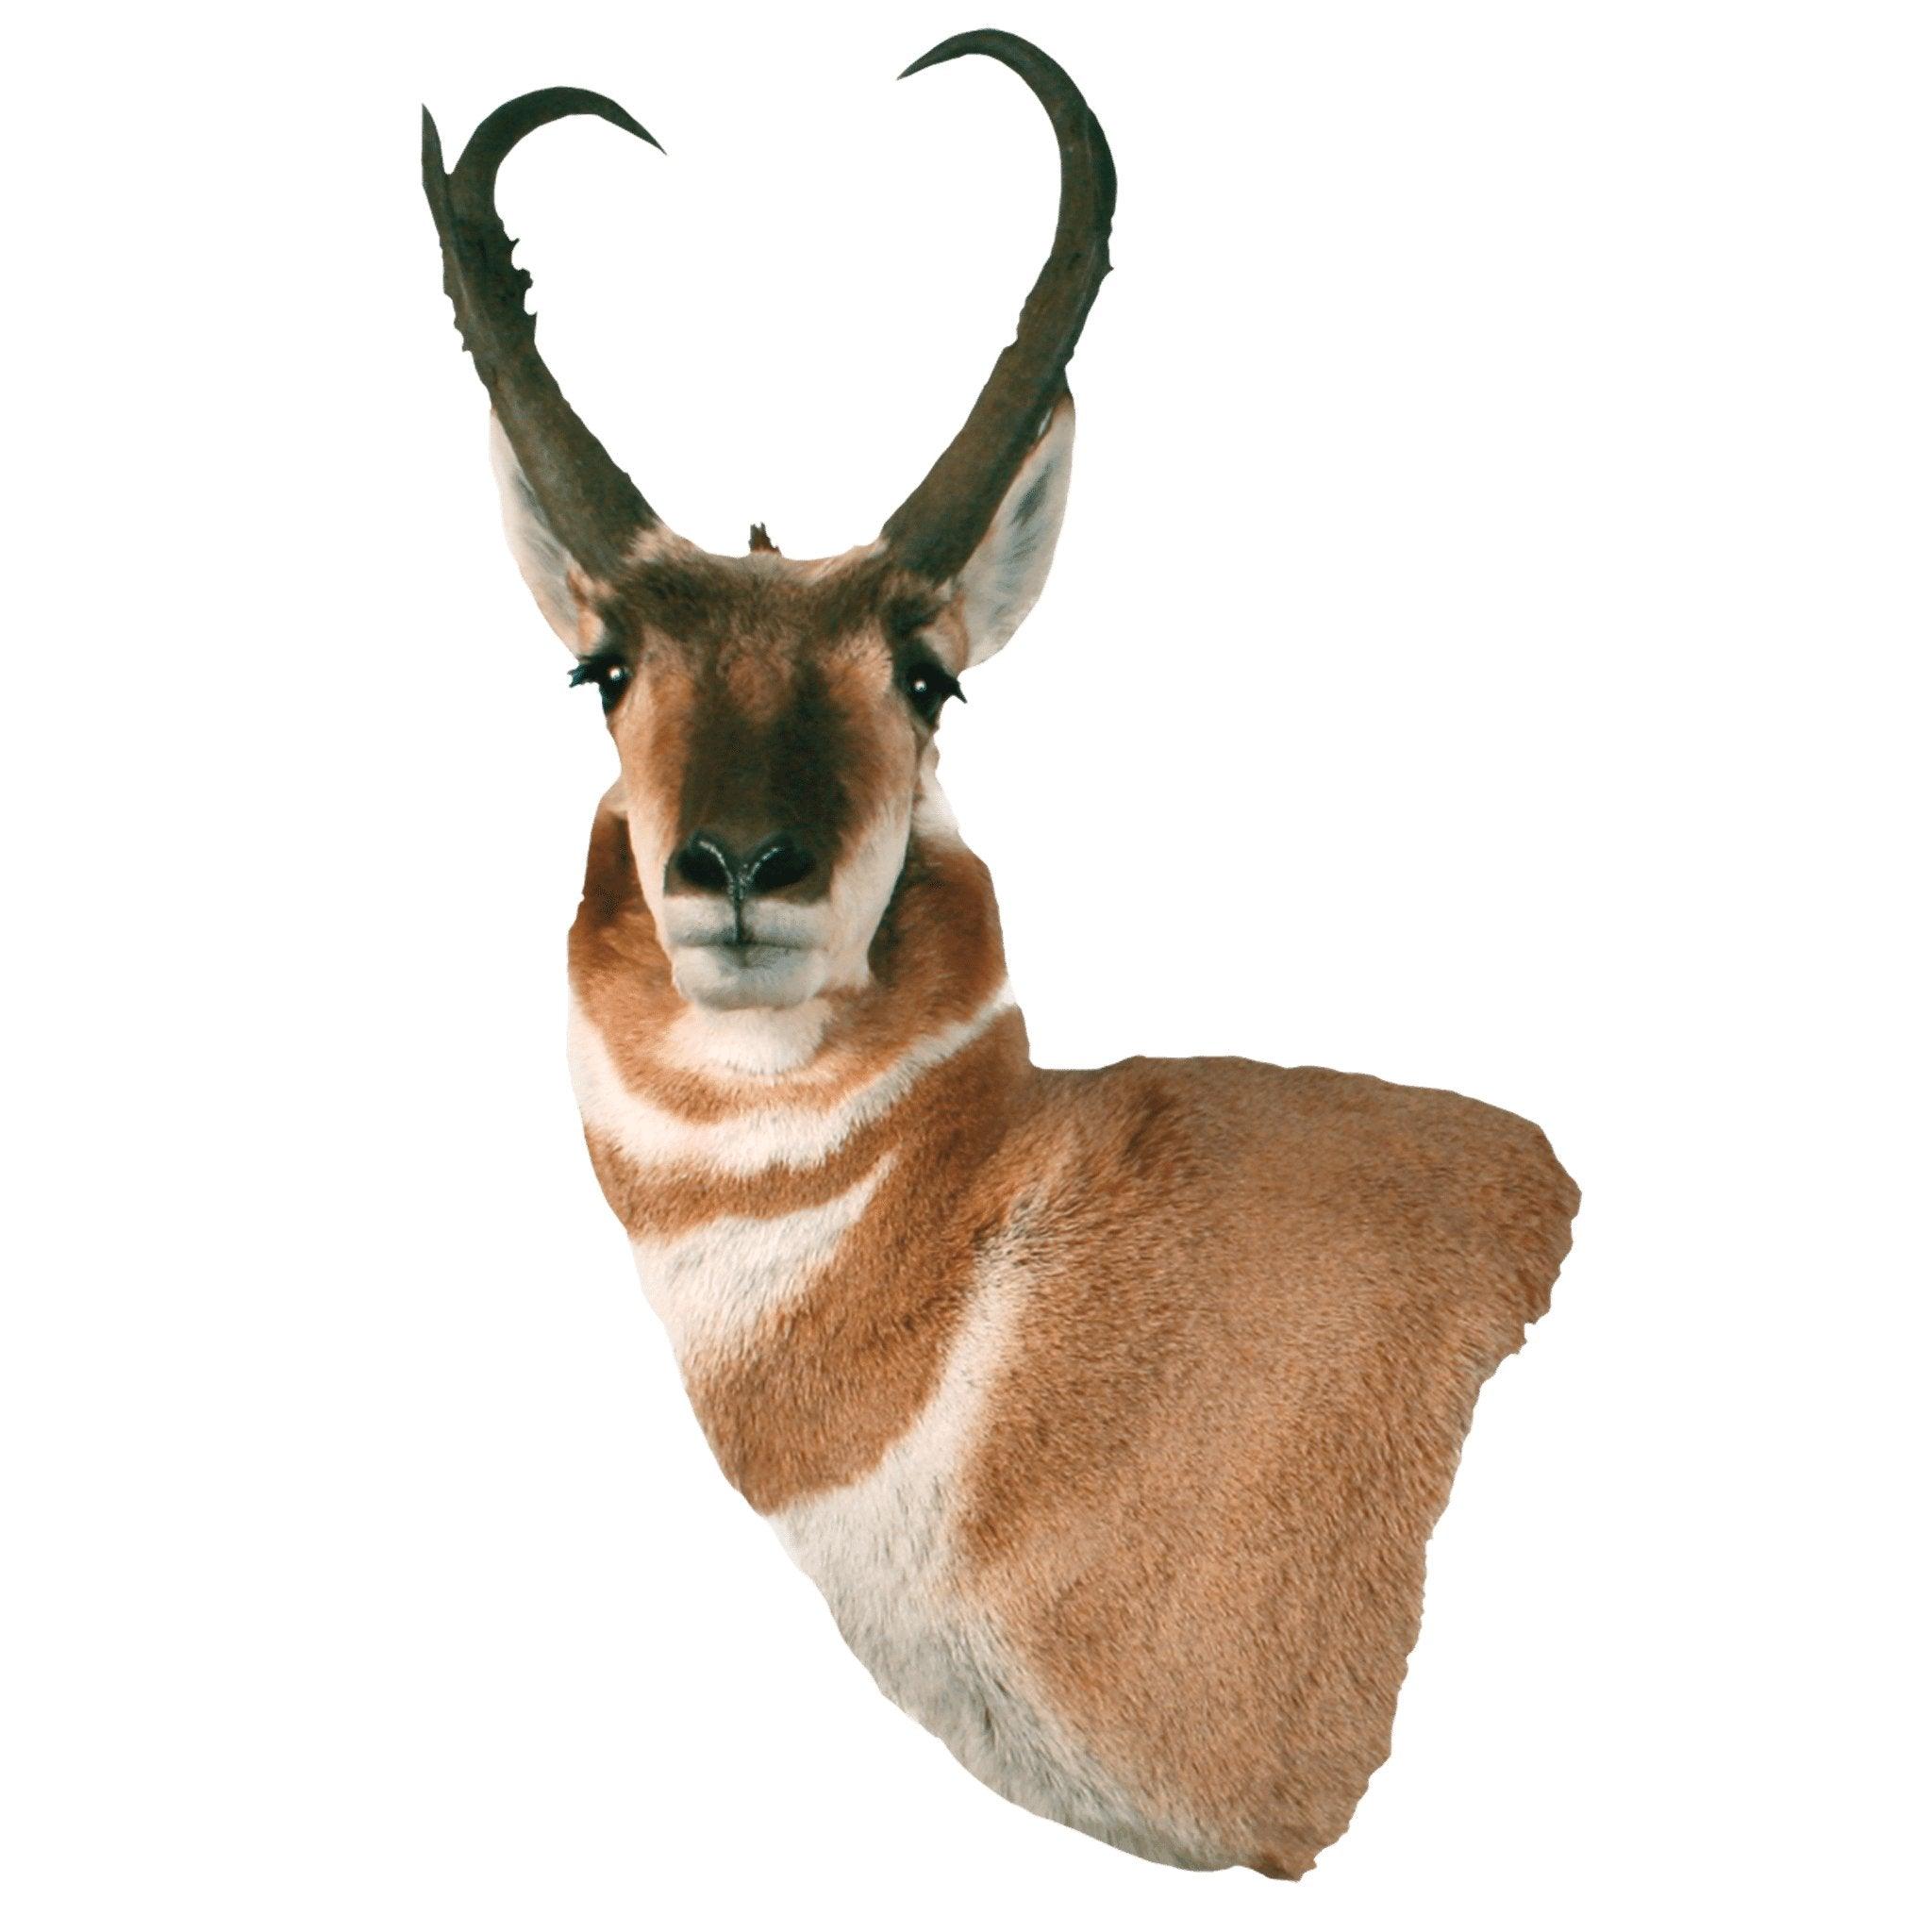 Antelope (Wall Pedestal) - Matuska Taxidermy Supply Company